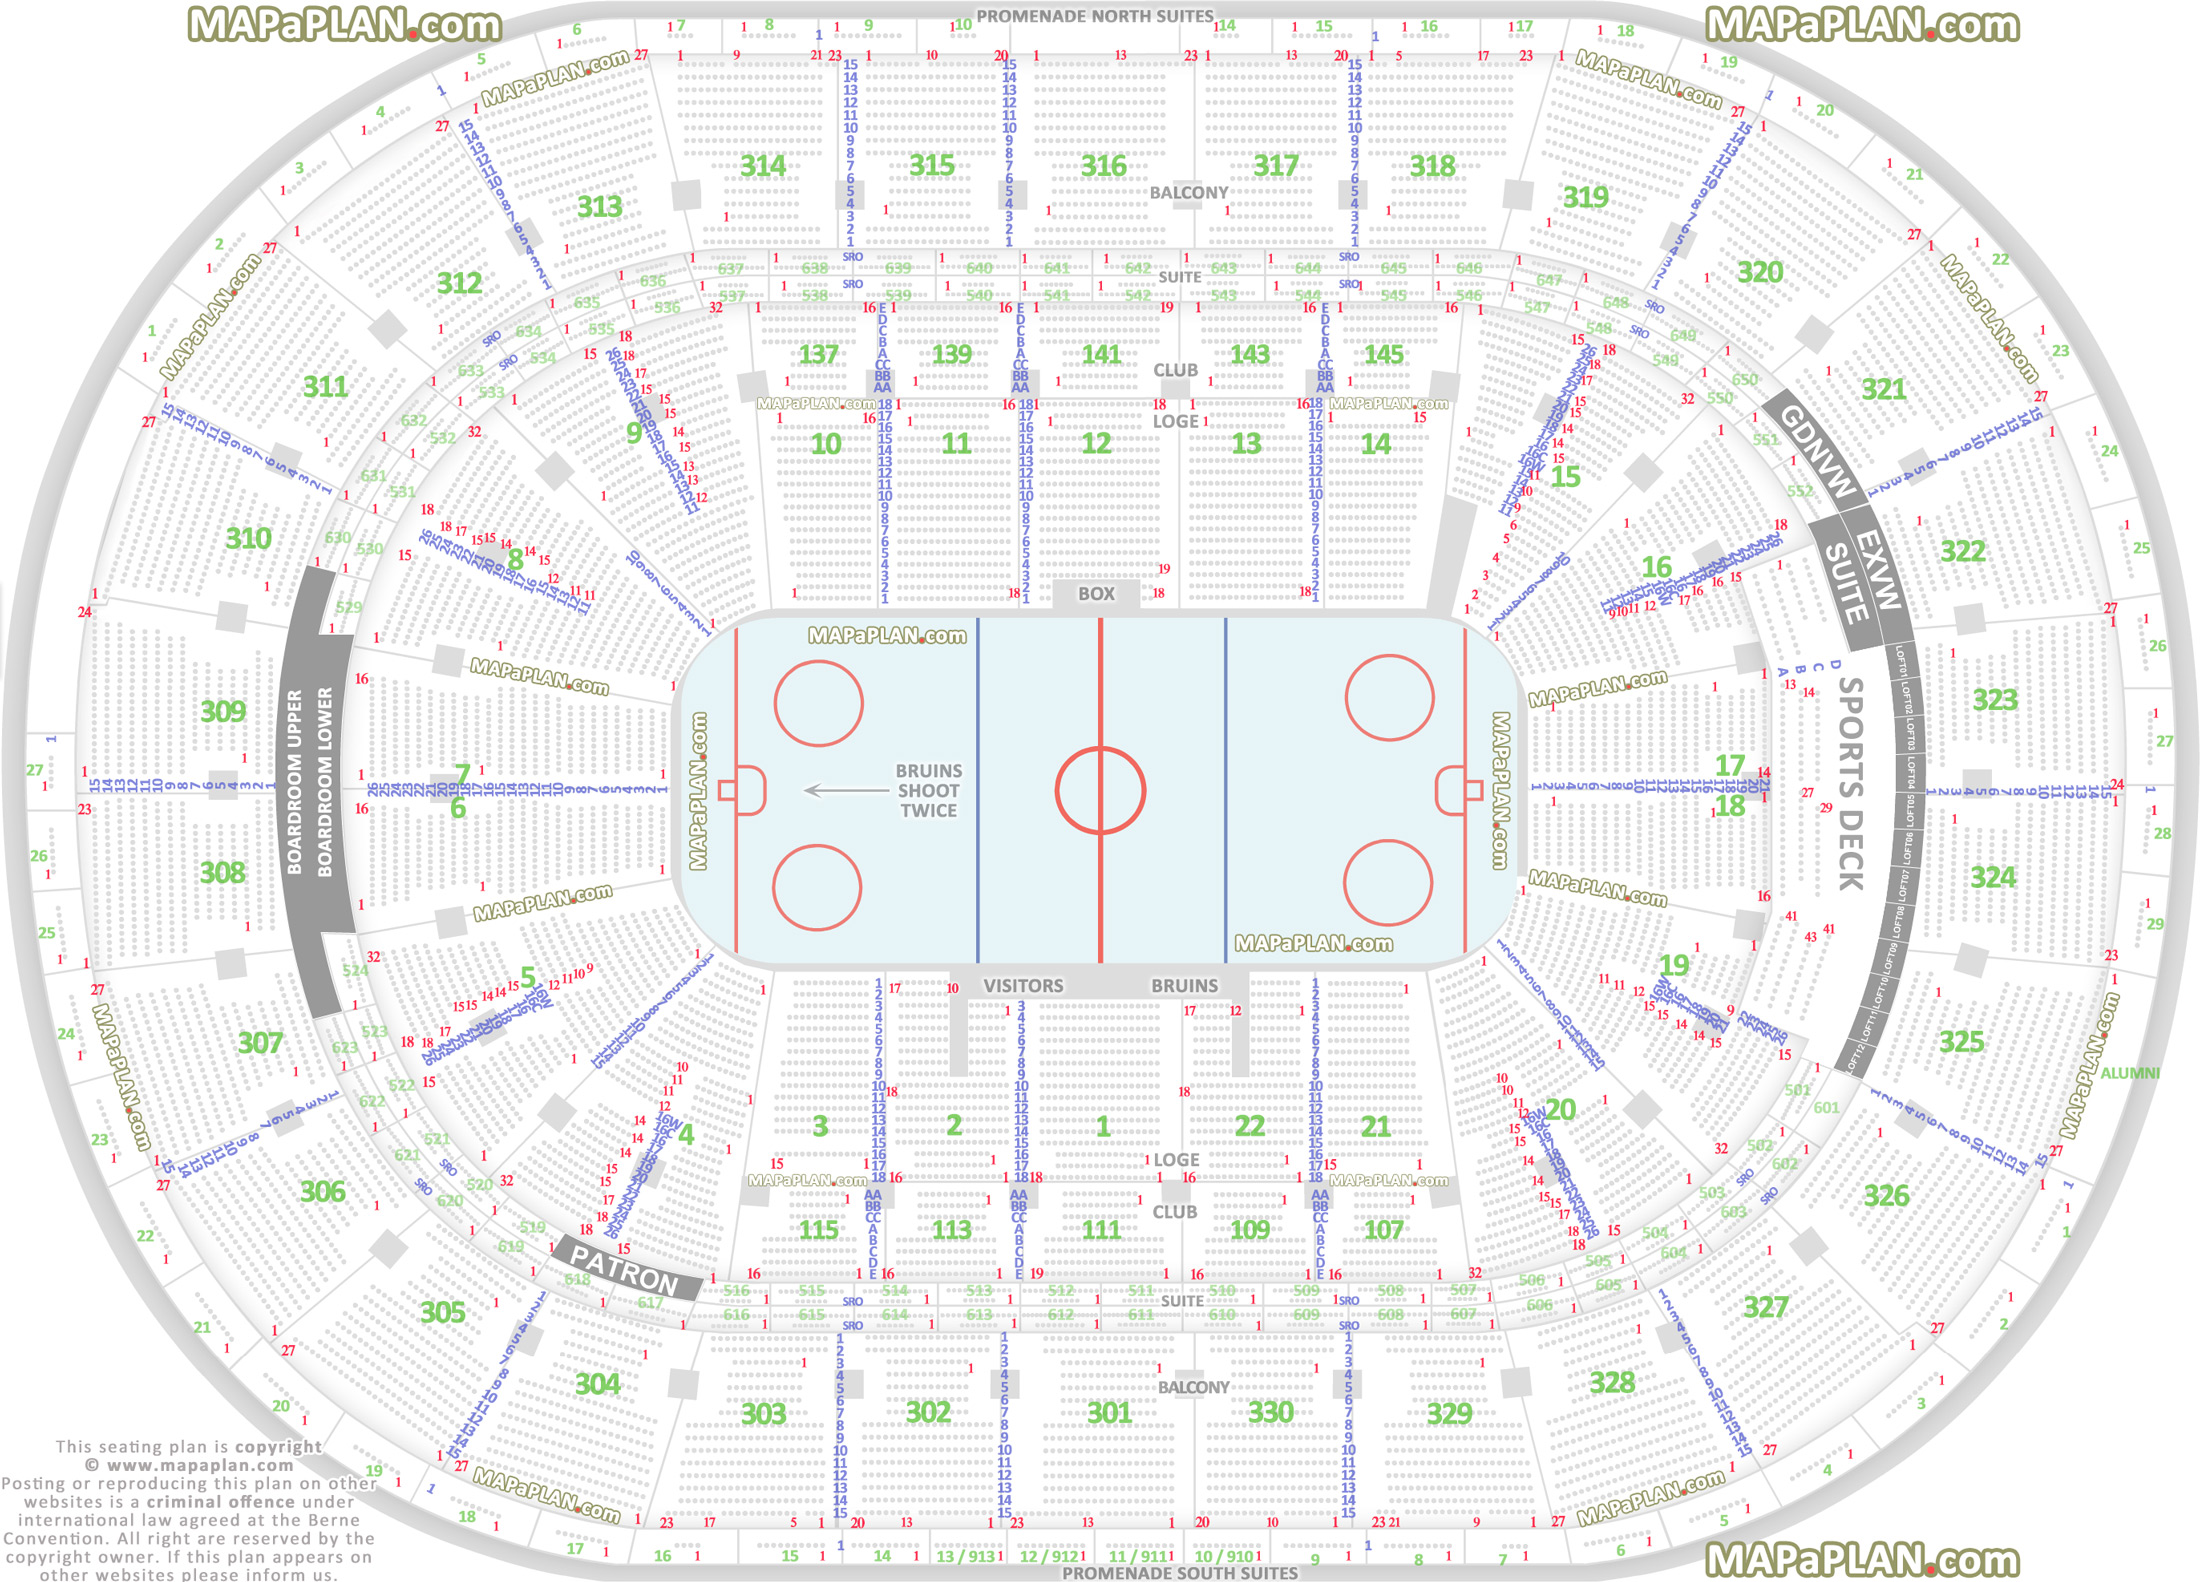 Square Garden Seating Chart Hockey